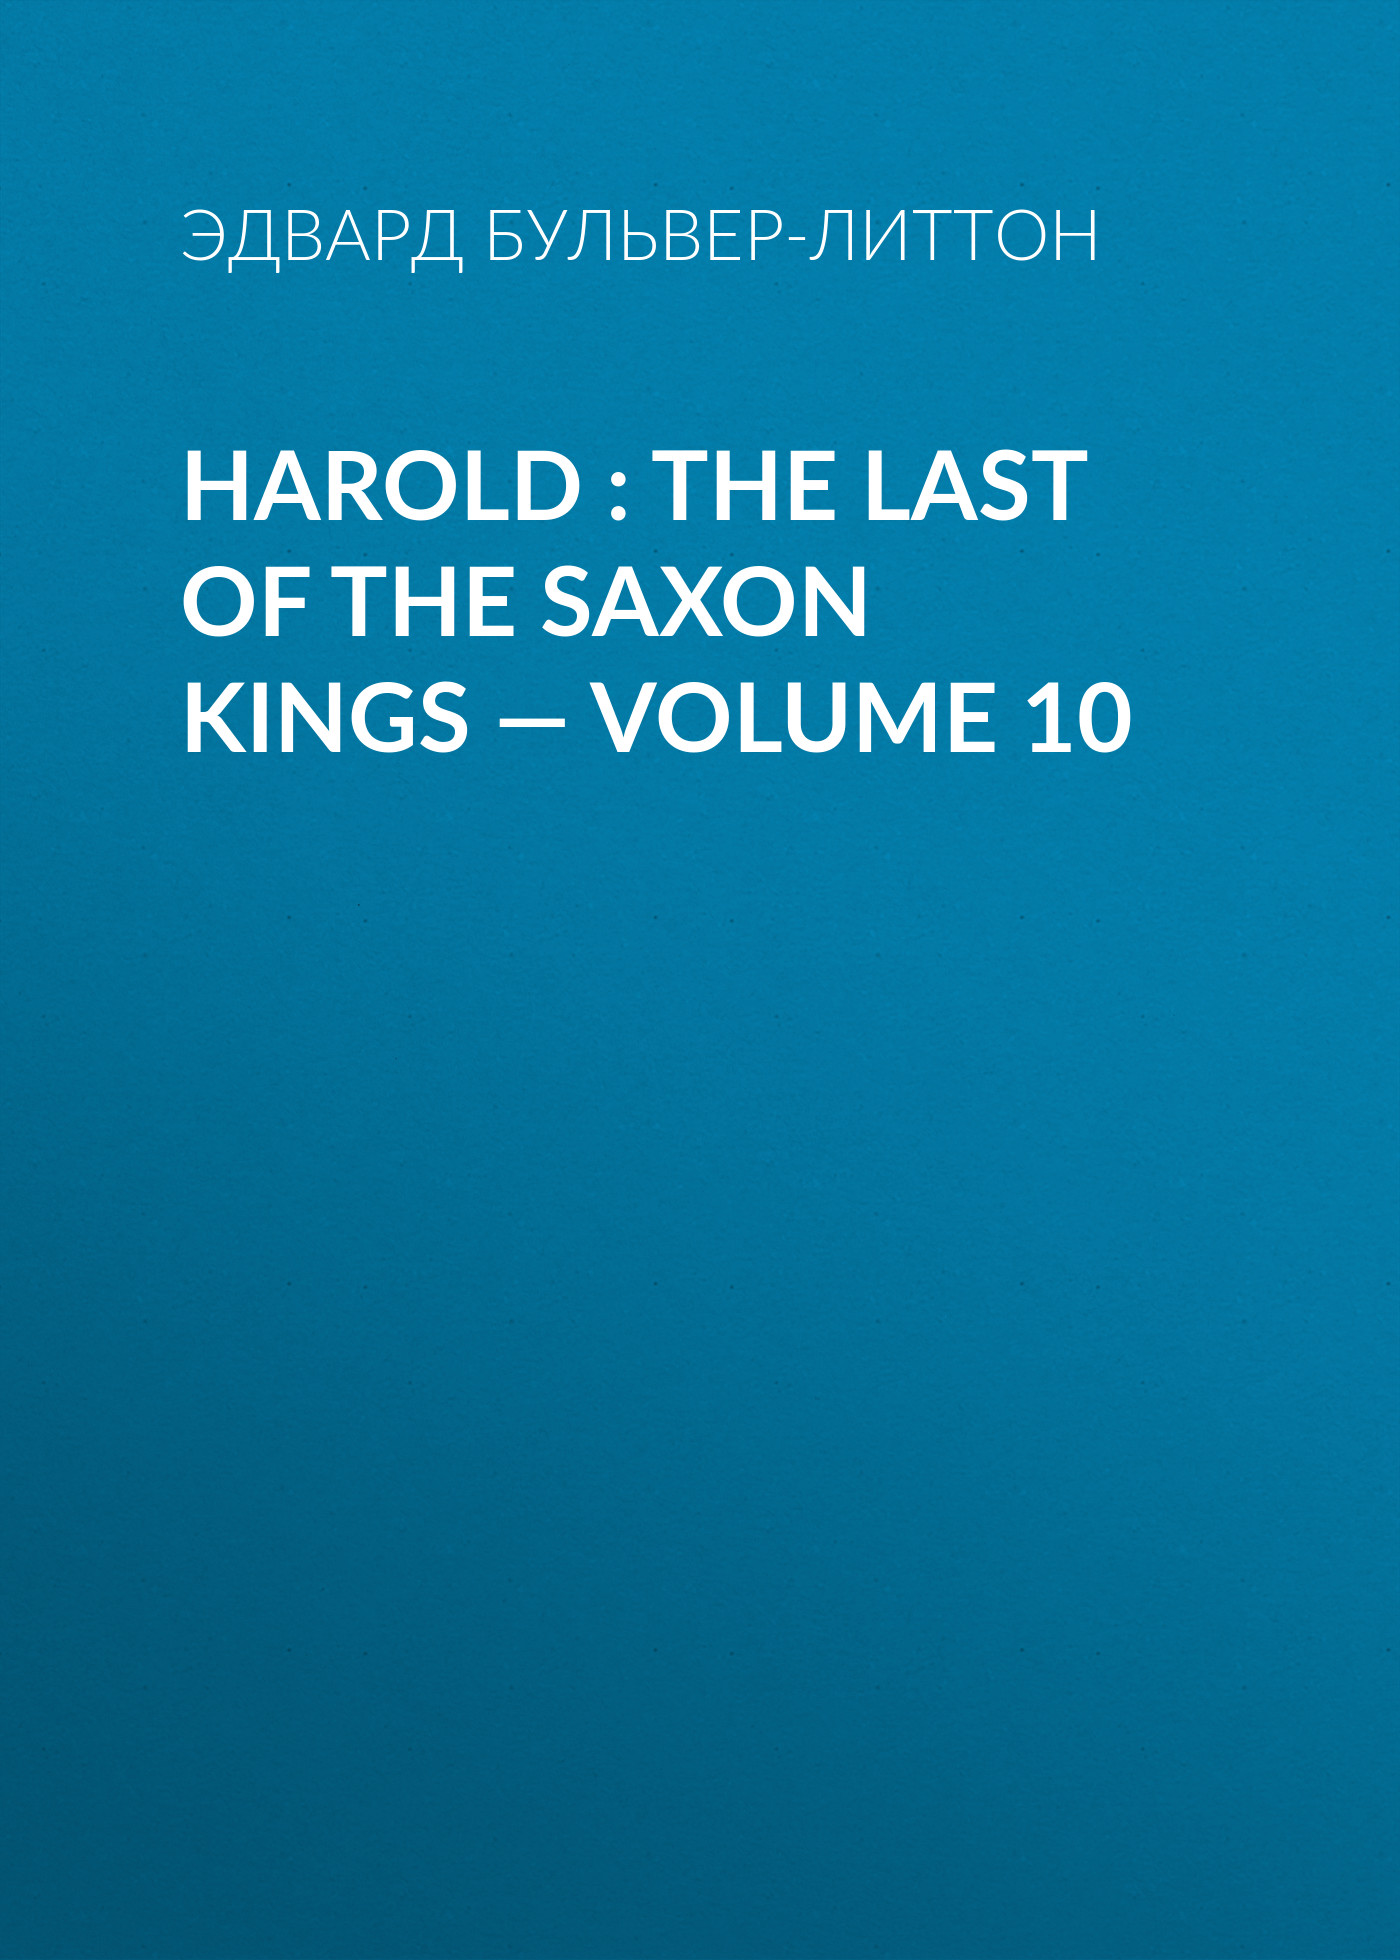 Harold : the Last of the Saxon Kings— Volume 10